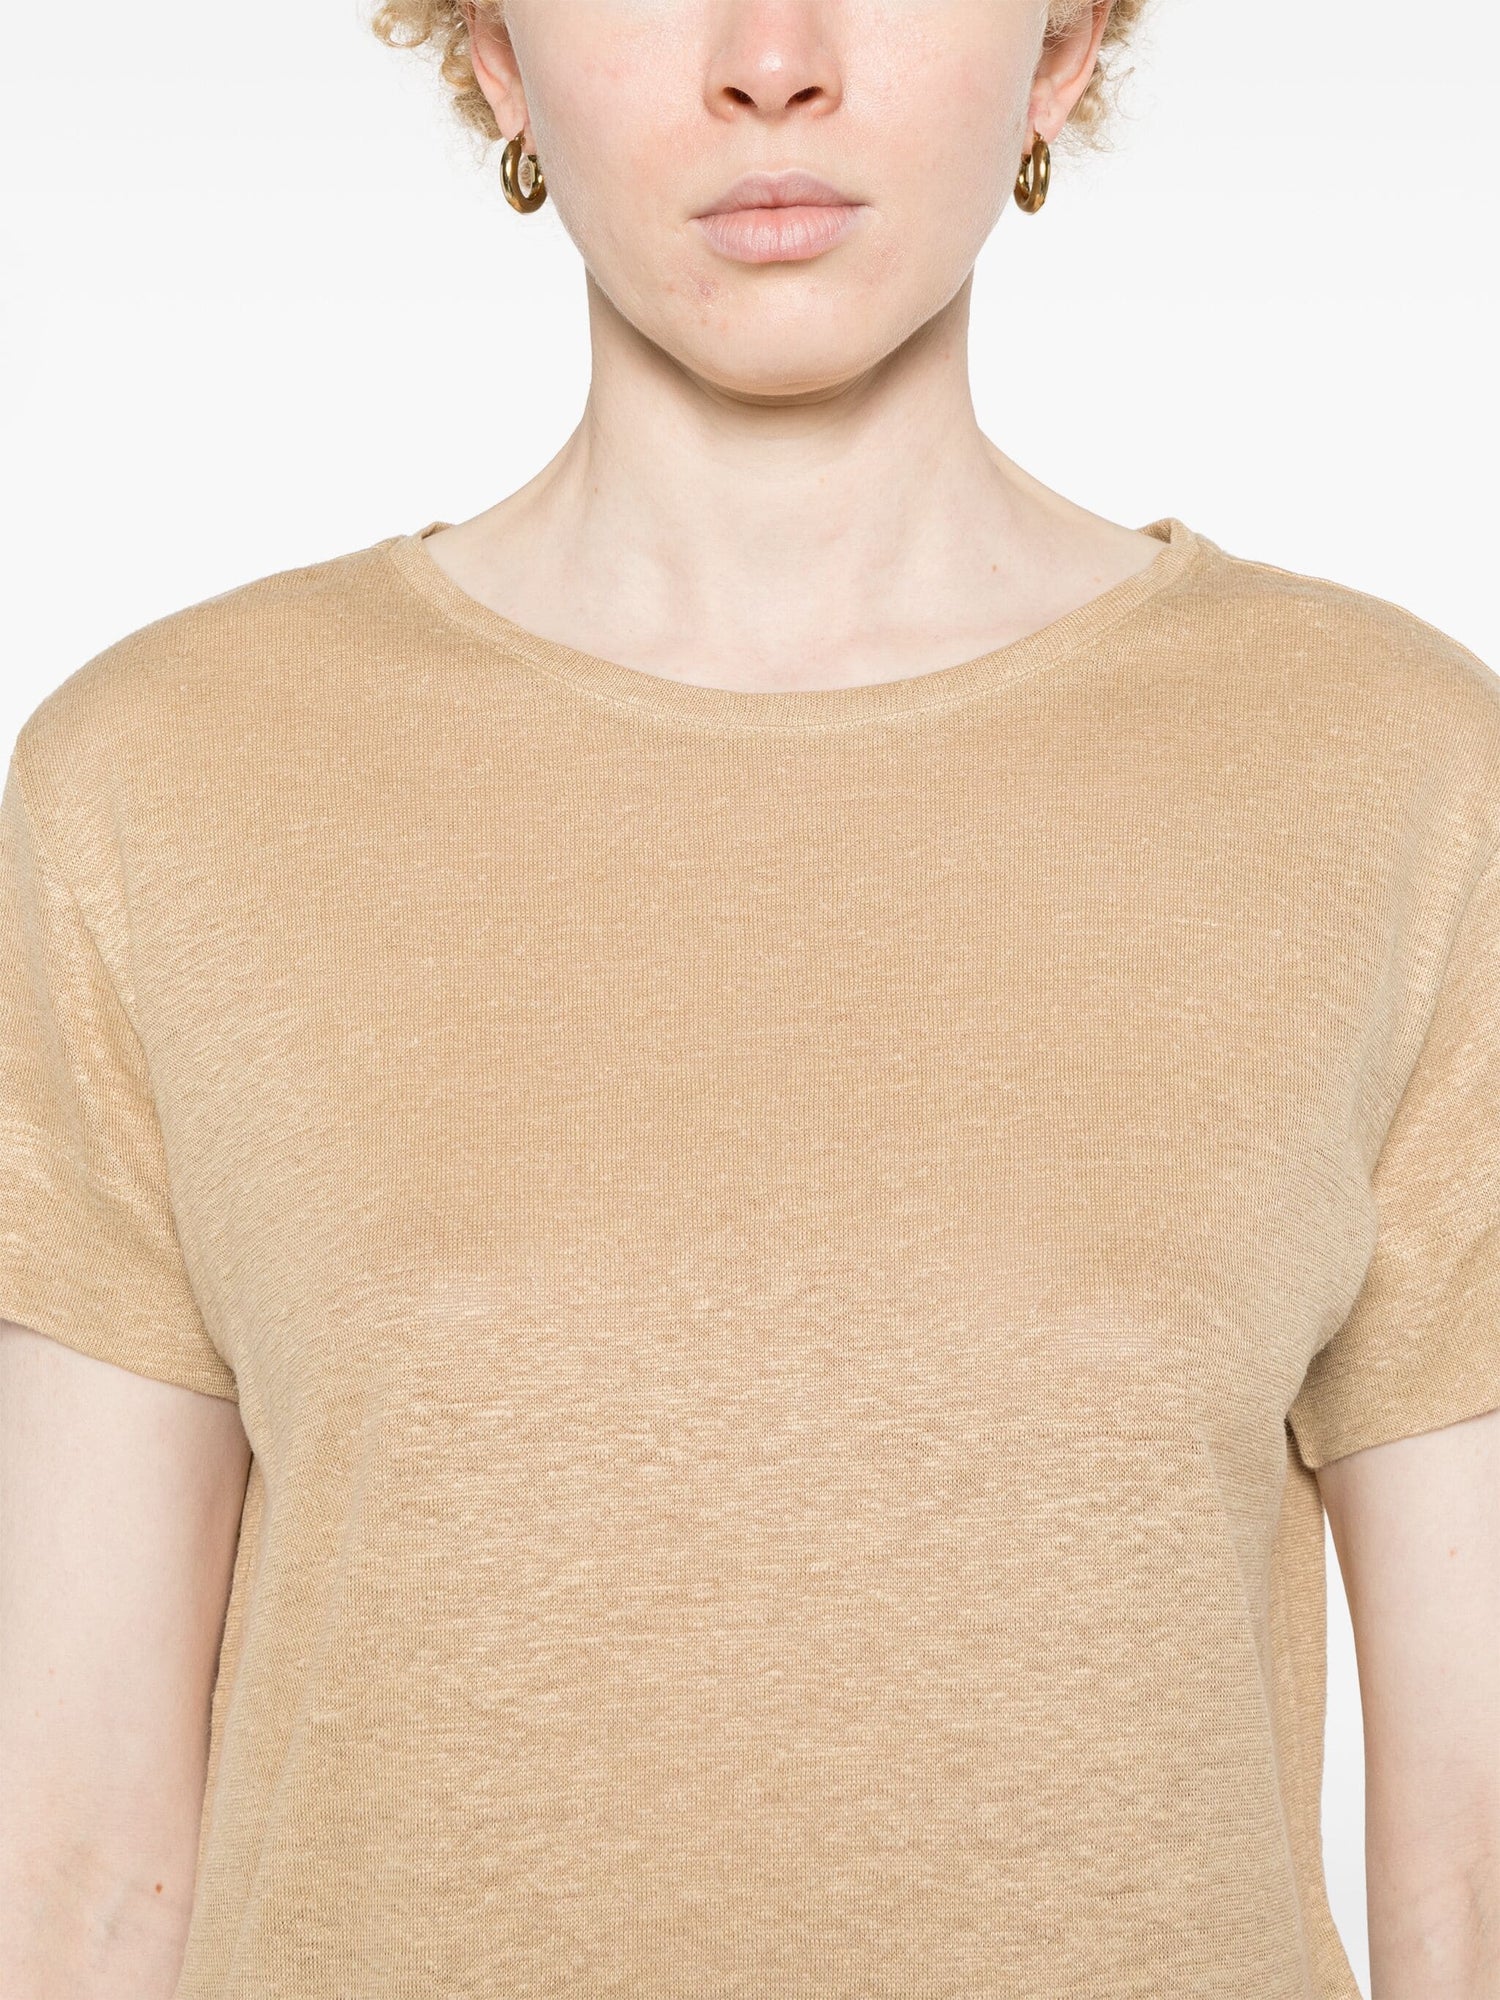 Natural ease t-shirt, beige